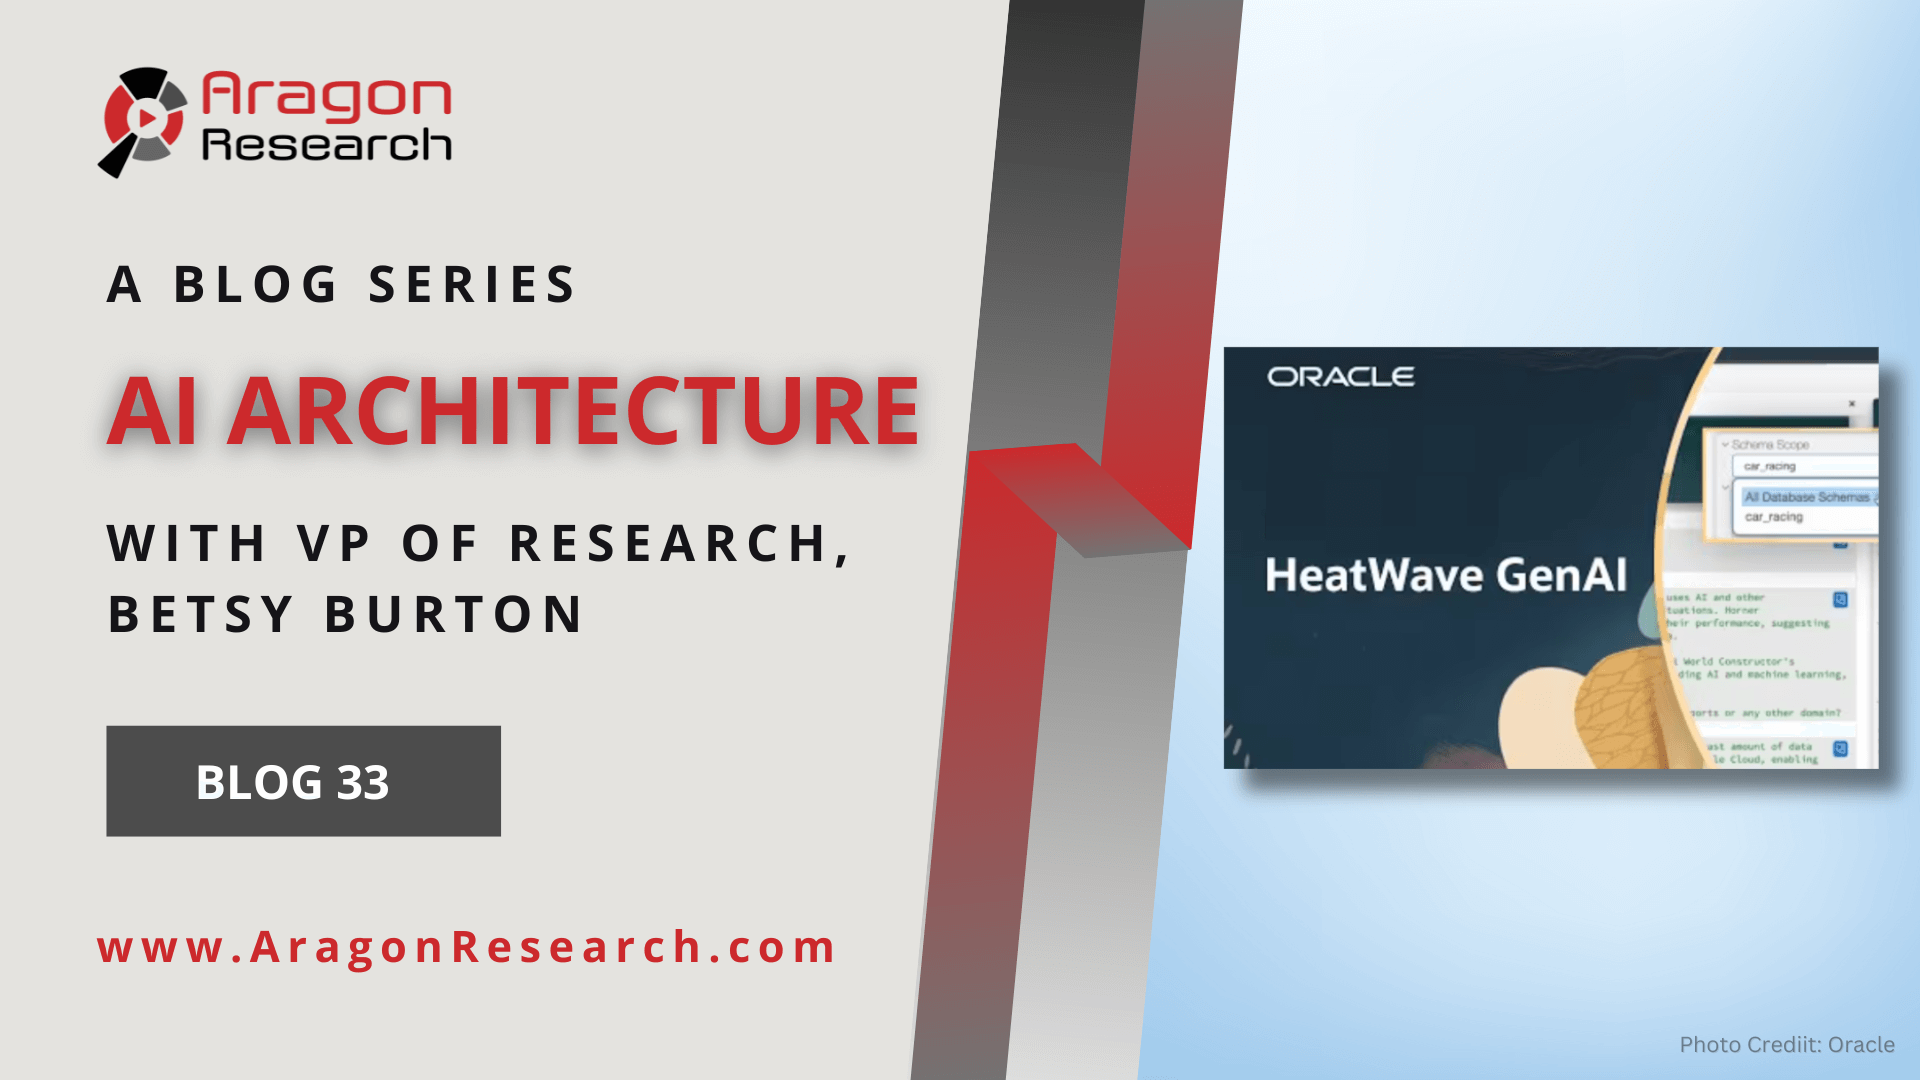 Oracle's Leap into Generative AI with HeatWave GenAI